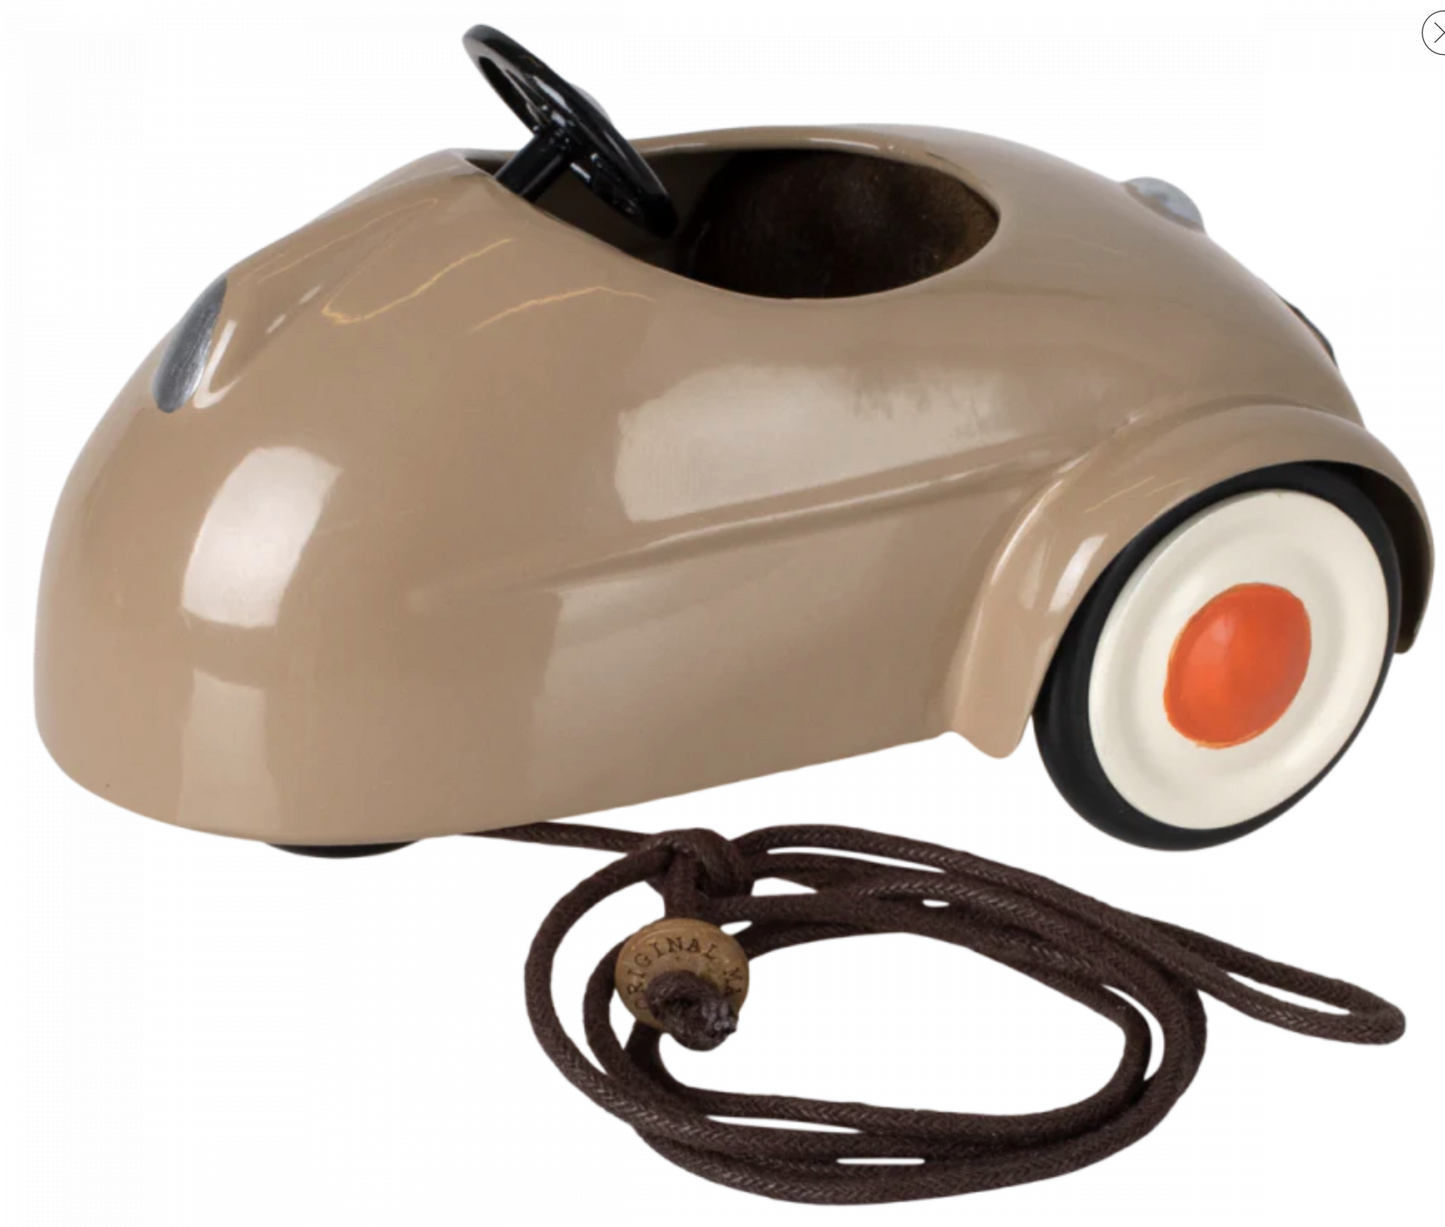 Mouse Car- Light Brown